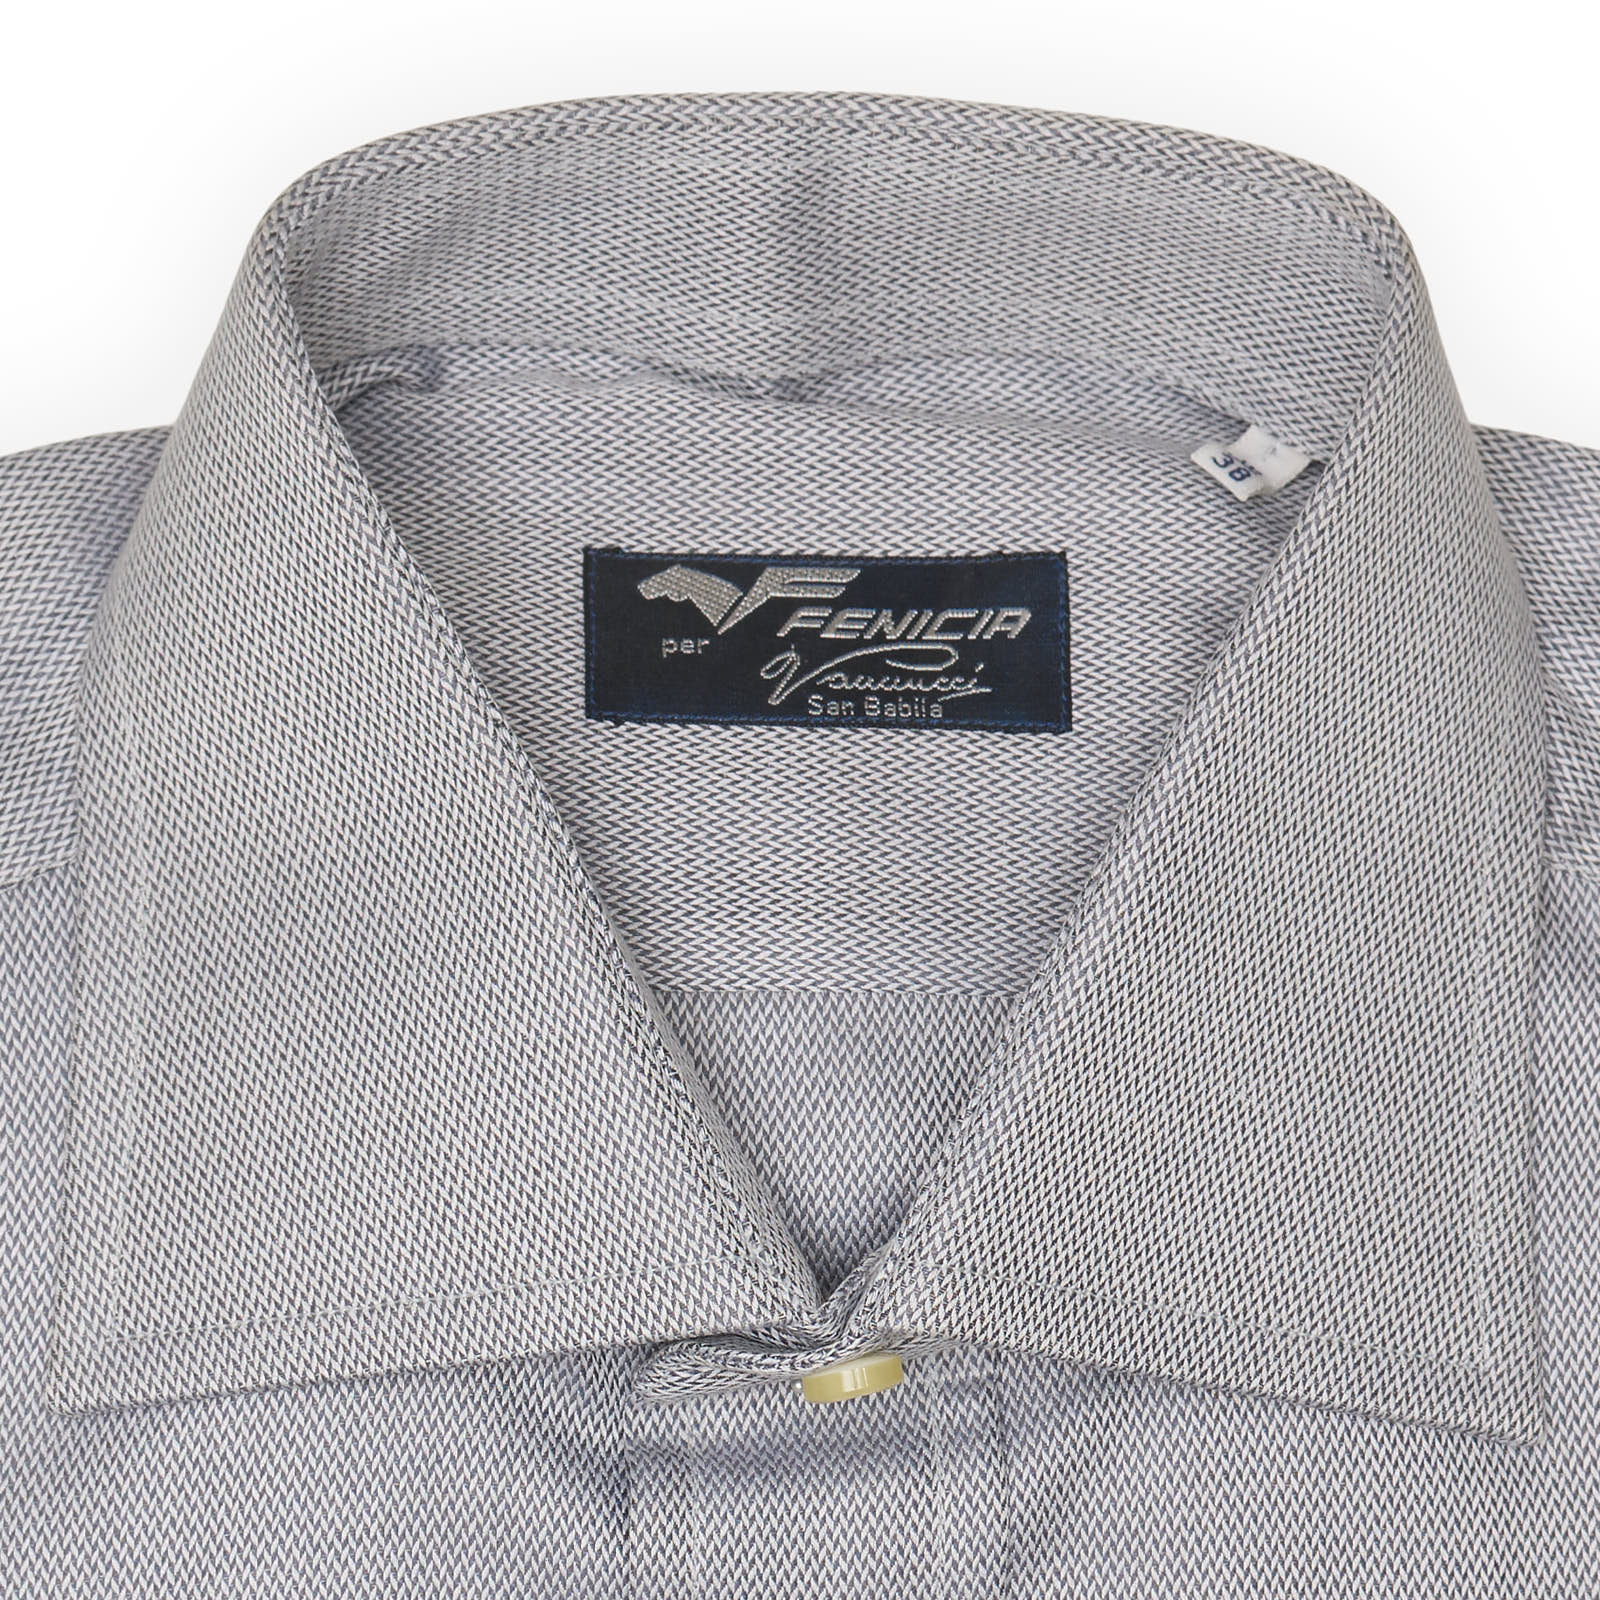 FENICIA for Vannucci Gray Cotton Dress Shirt EU 38 NEW US 15